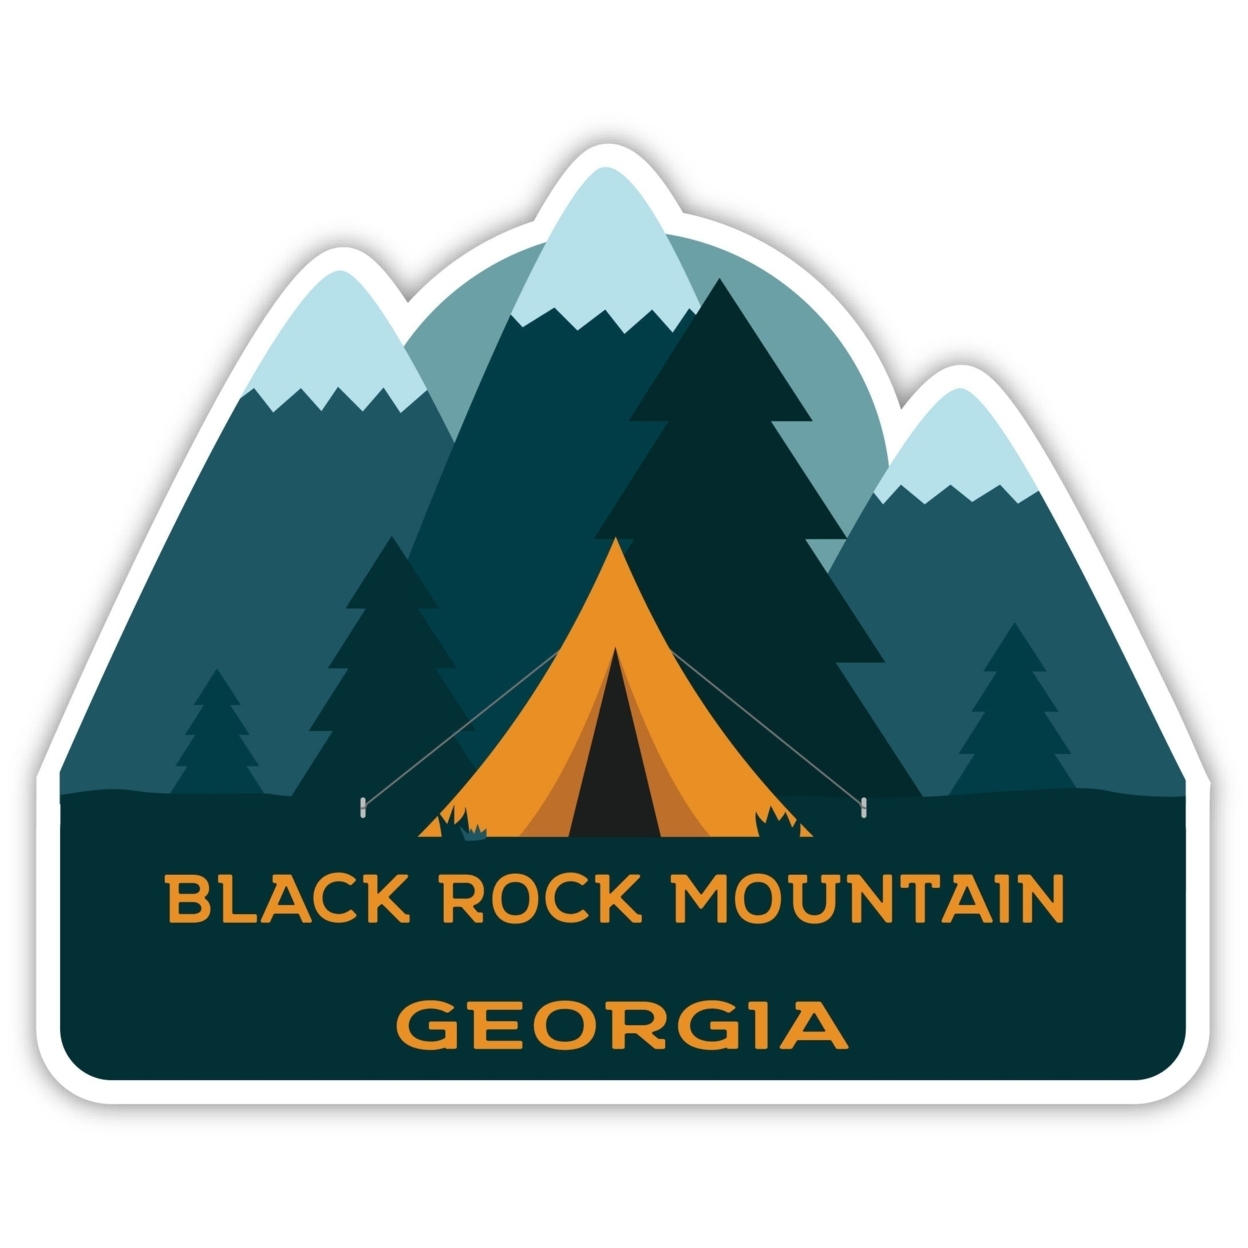 Black Rock Mountain Georgia Souvenir Decorative Stickers (Choose Theme And Size) - 4-Pack, 12-Inch, Tent